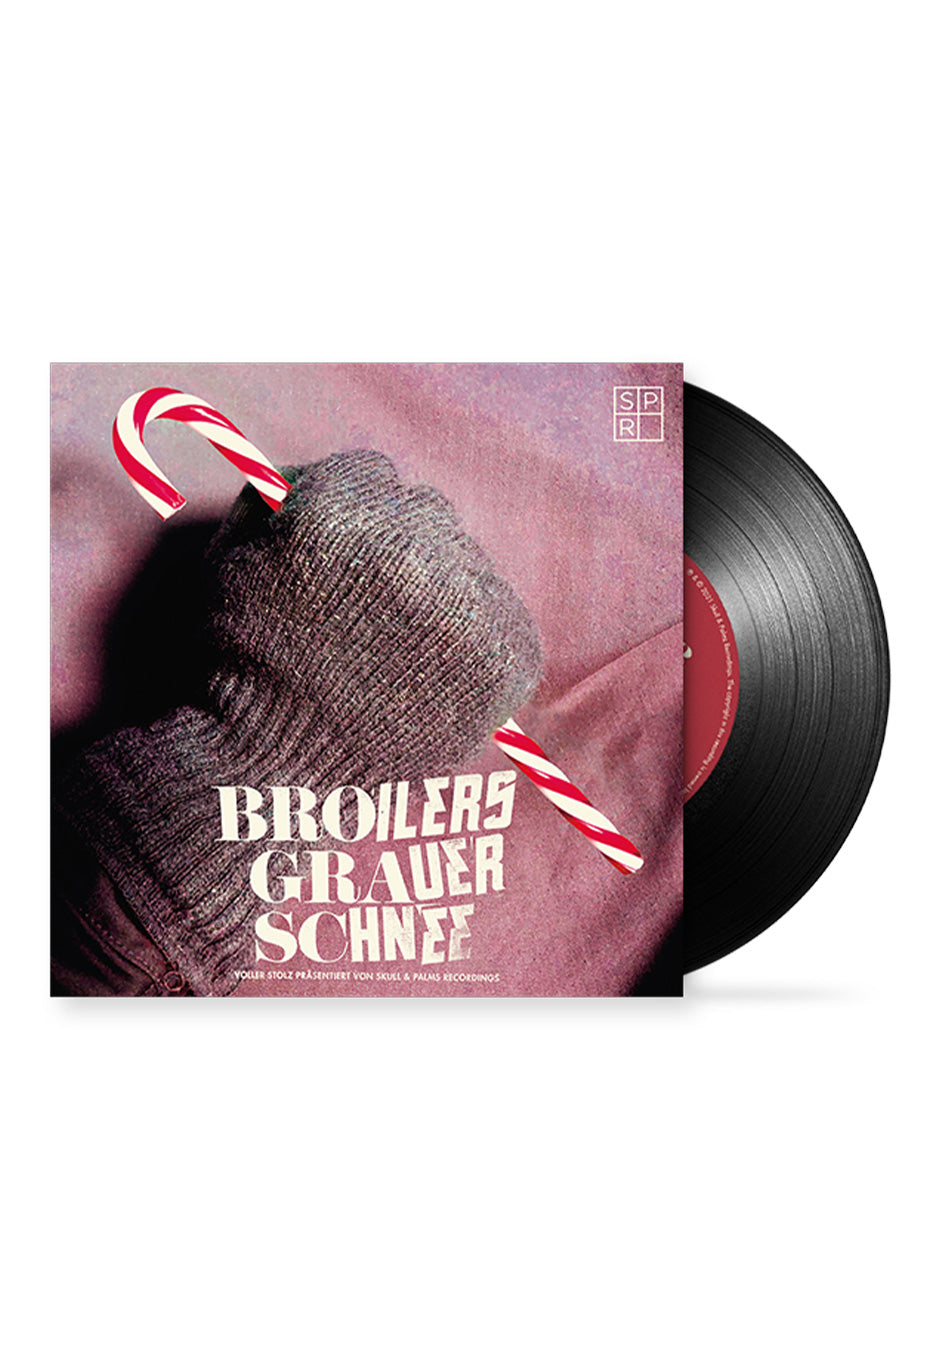 Broilers - Grauer Schnee (limitierte Vinyl-Single) - Seven Inch